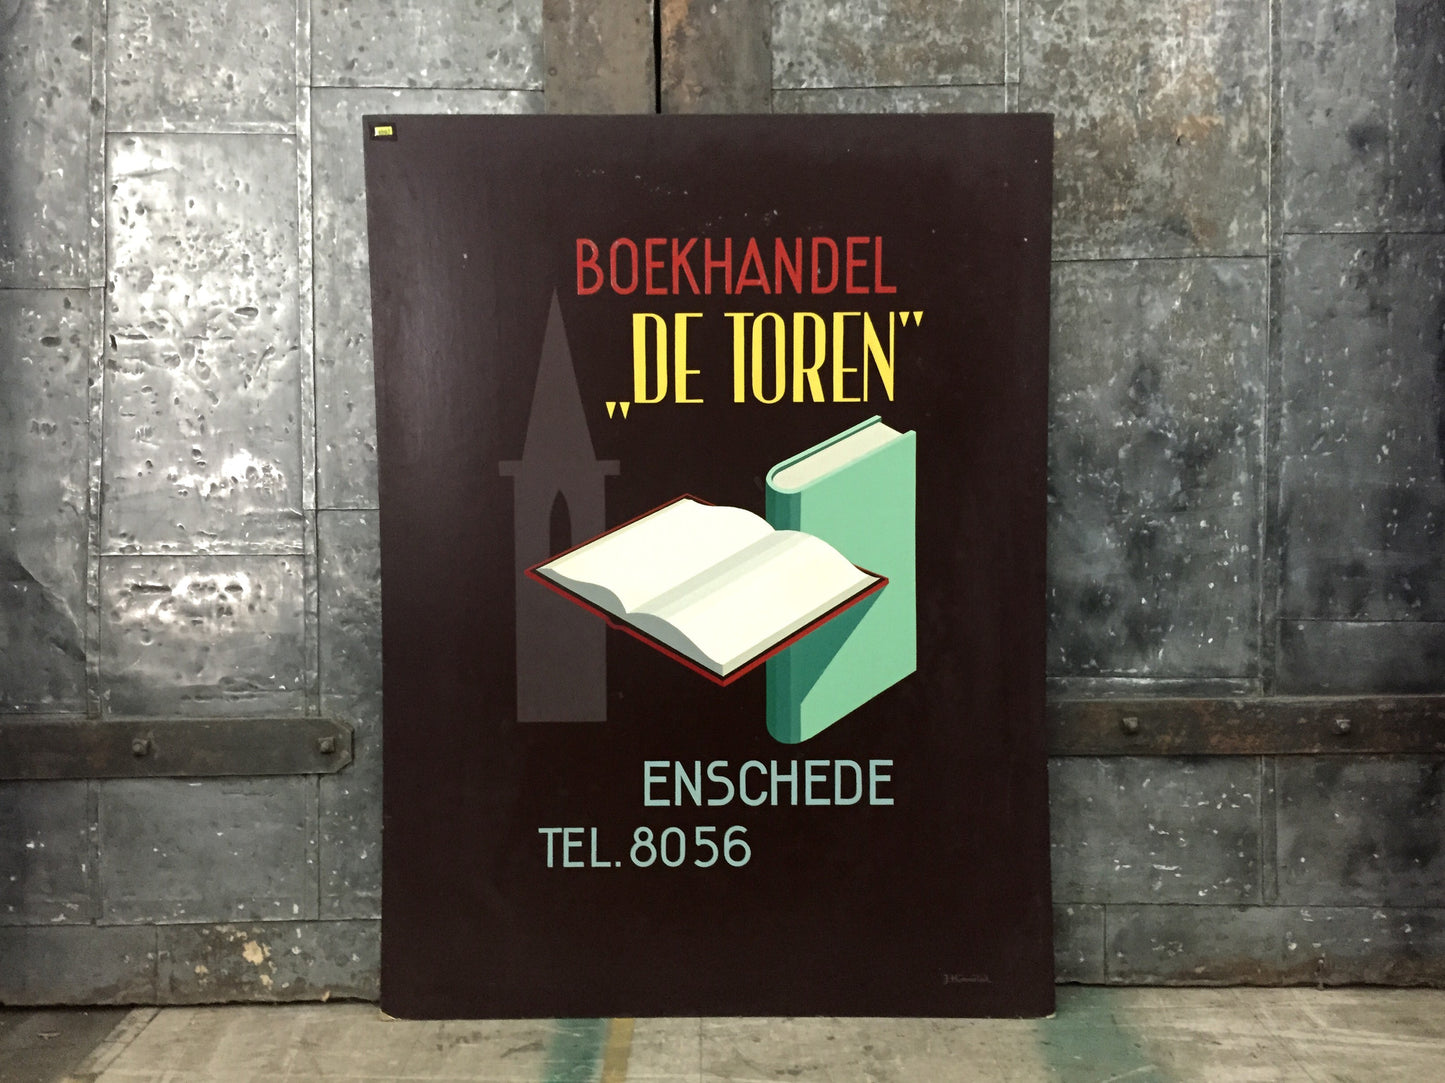 Dutch Advertising Sign, "Boekhandel"